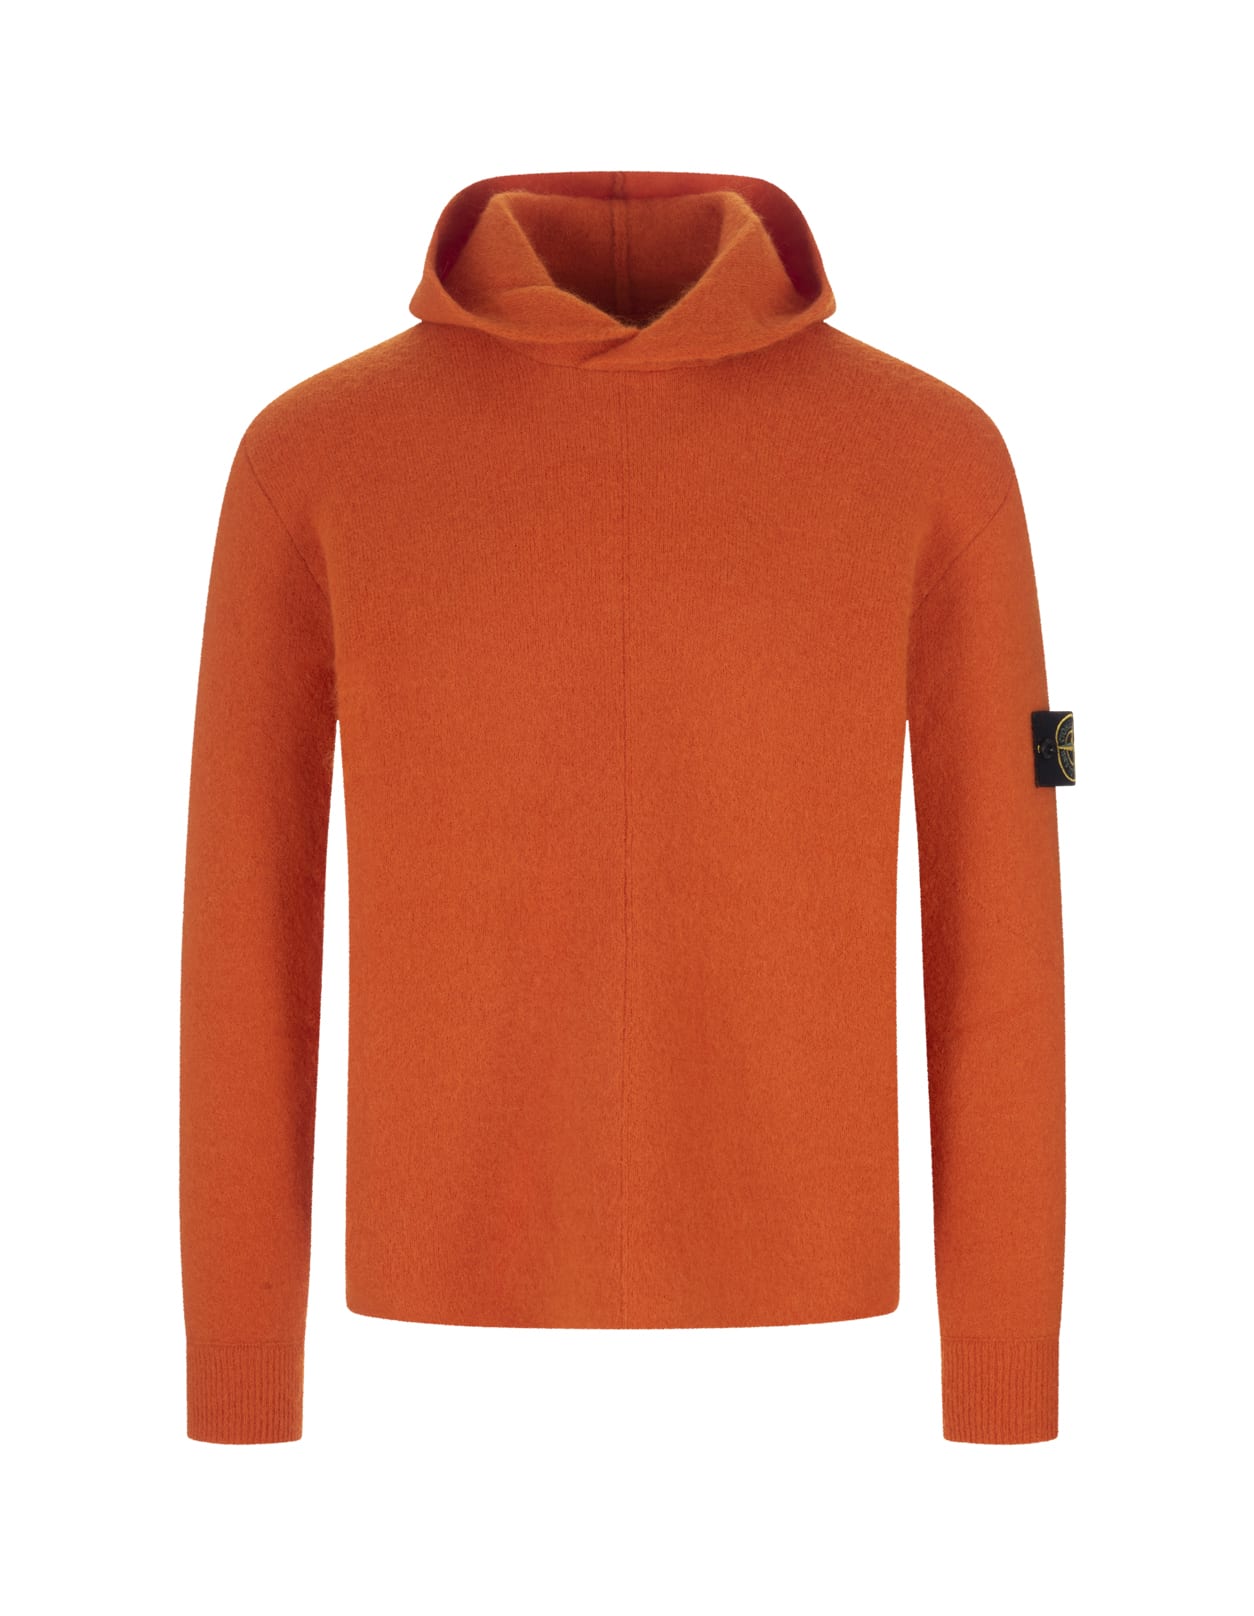 Man Orange Sweater With Hood And Stone Island Badge